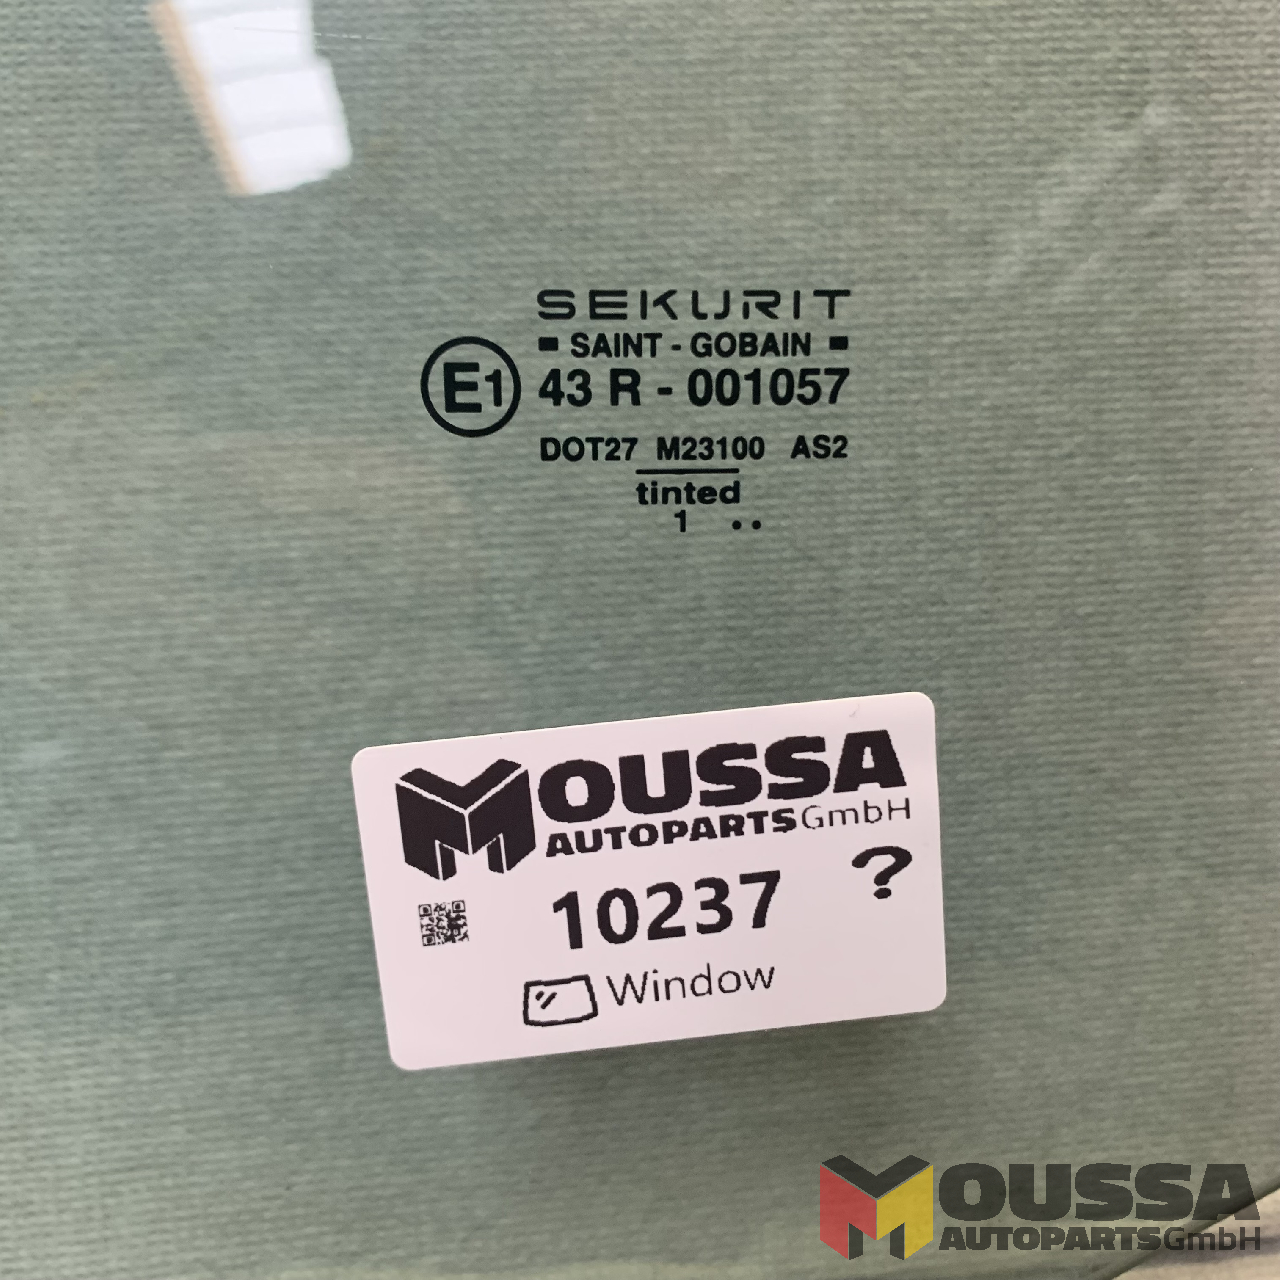 MOUSSA-AUTOPARTS-64921bf1242bf.jpg